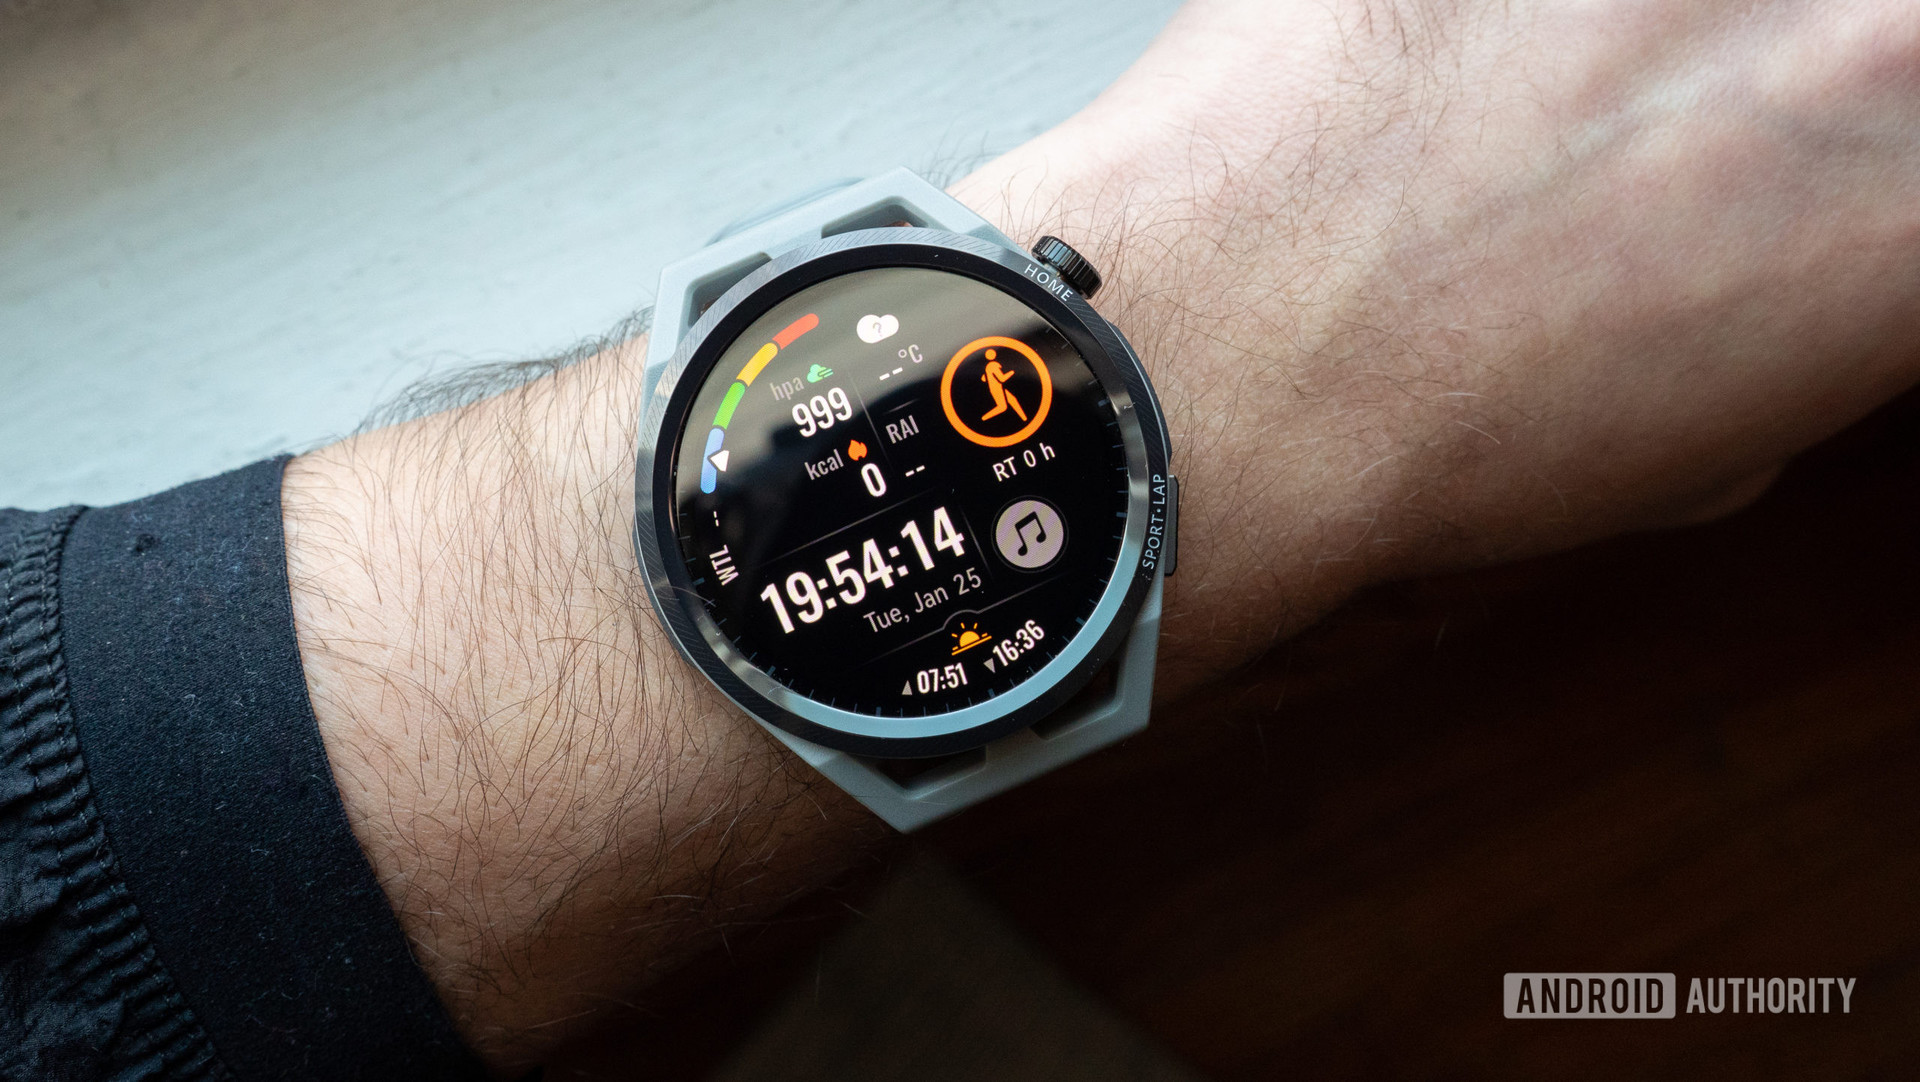 Huawei Watch GT Runner smartwatch on wrist